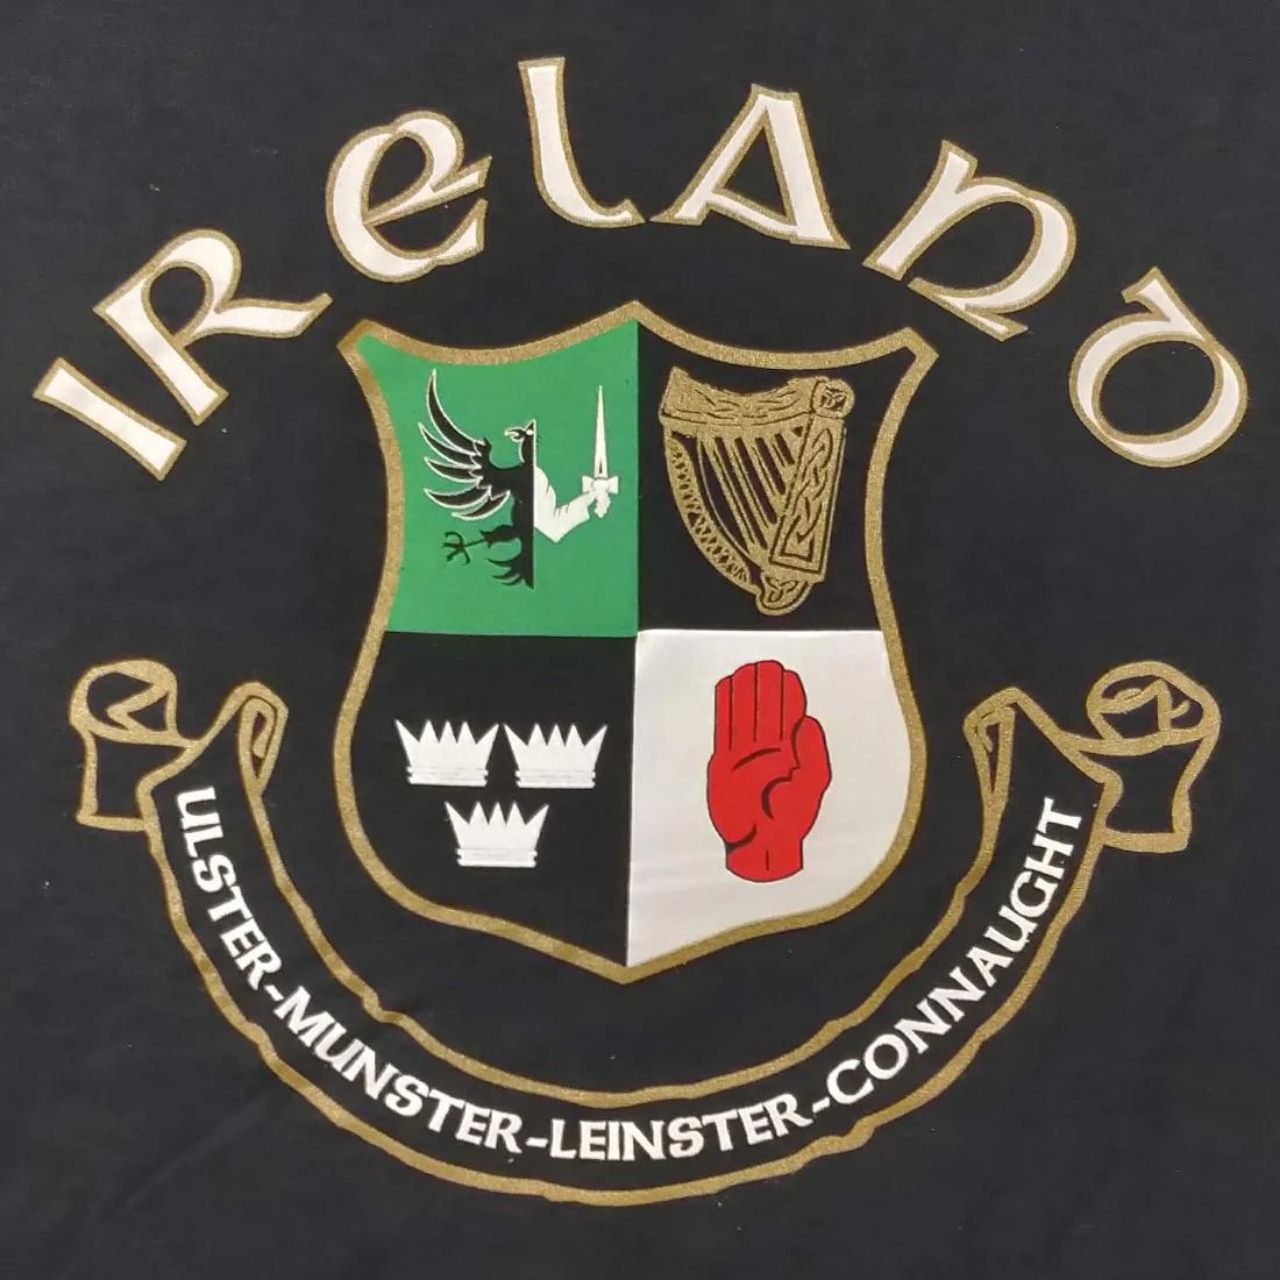 Navy Ireland Four Provinces T-Shirt